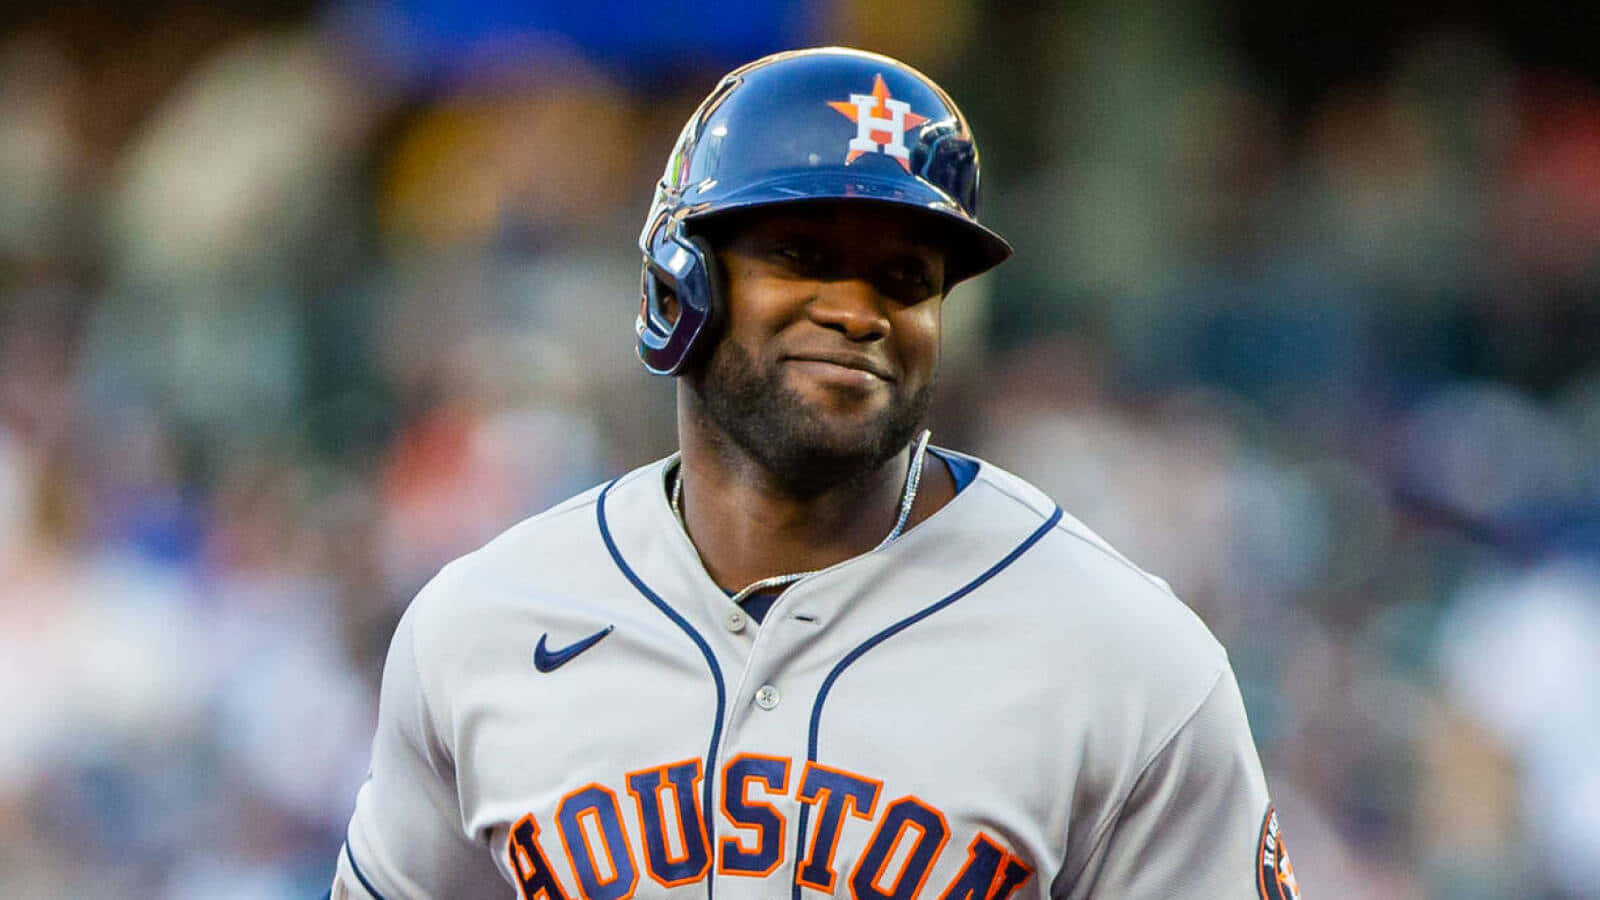 Houston Astros Player Smiling During Game.jpg Wallpaper